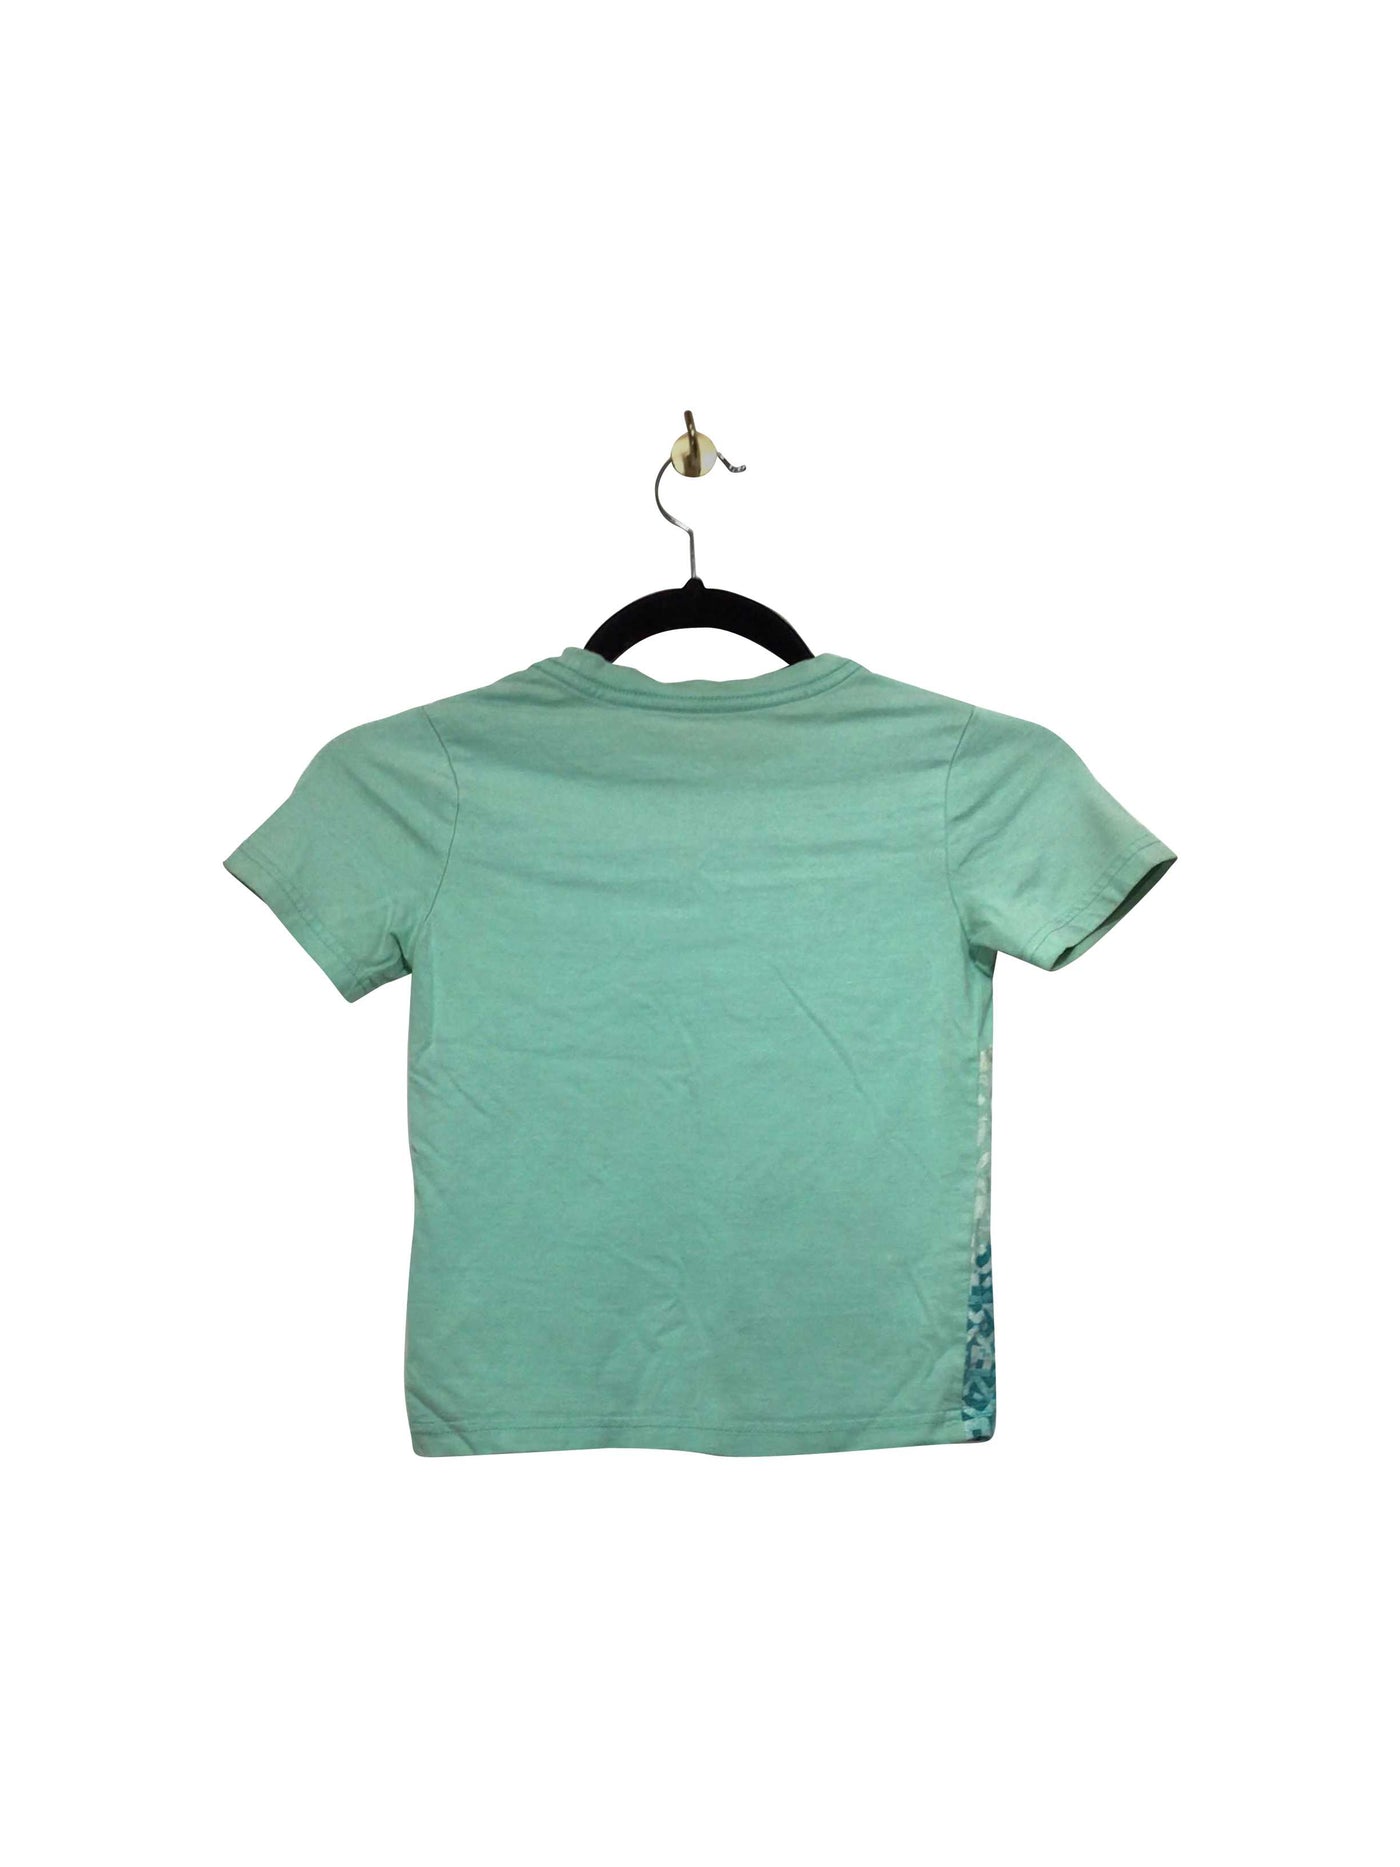 GYMBOREE Regular fit T-shirt in Green  -  4T  11.99 Koop